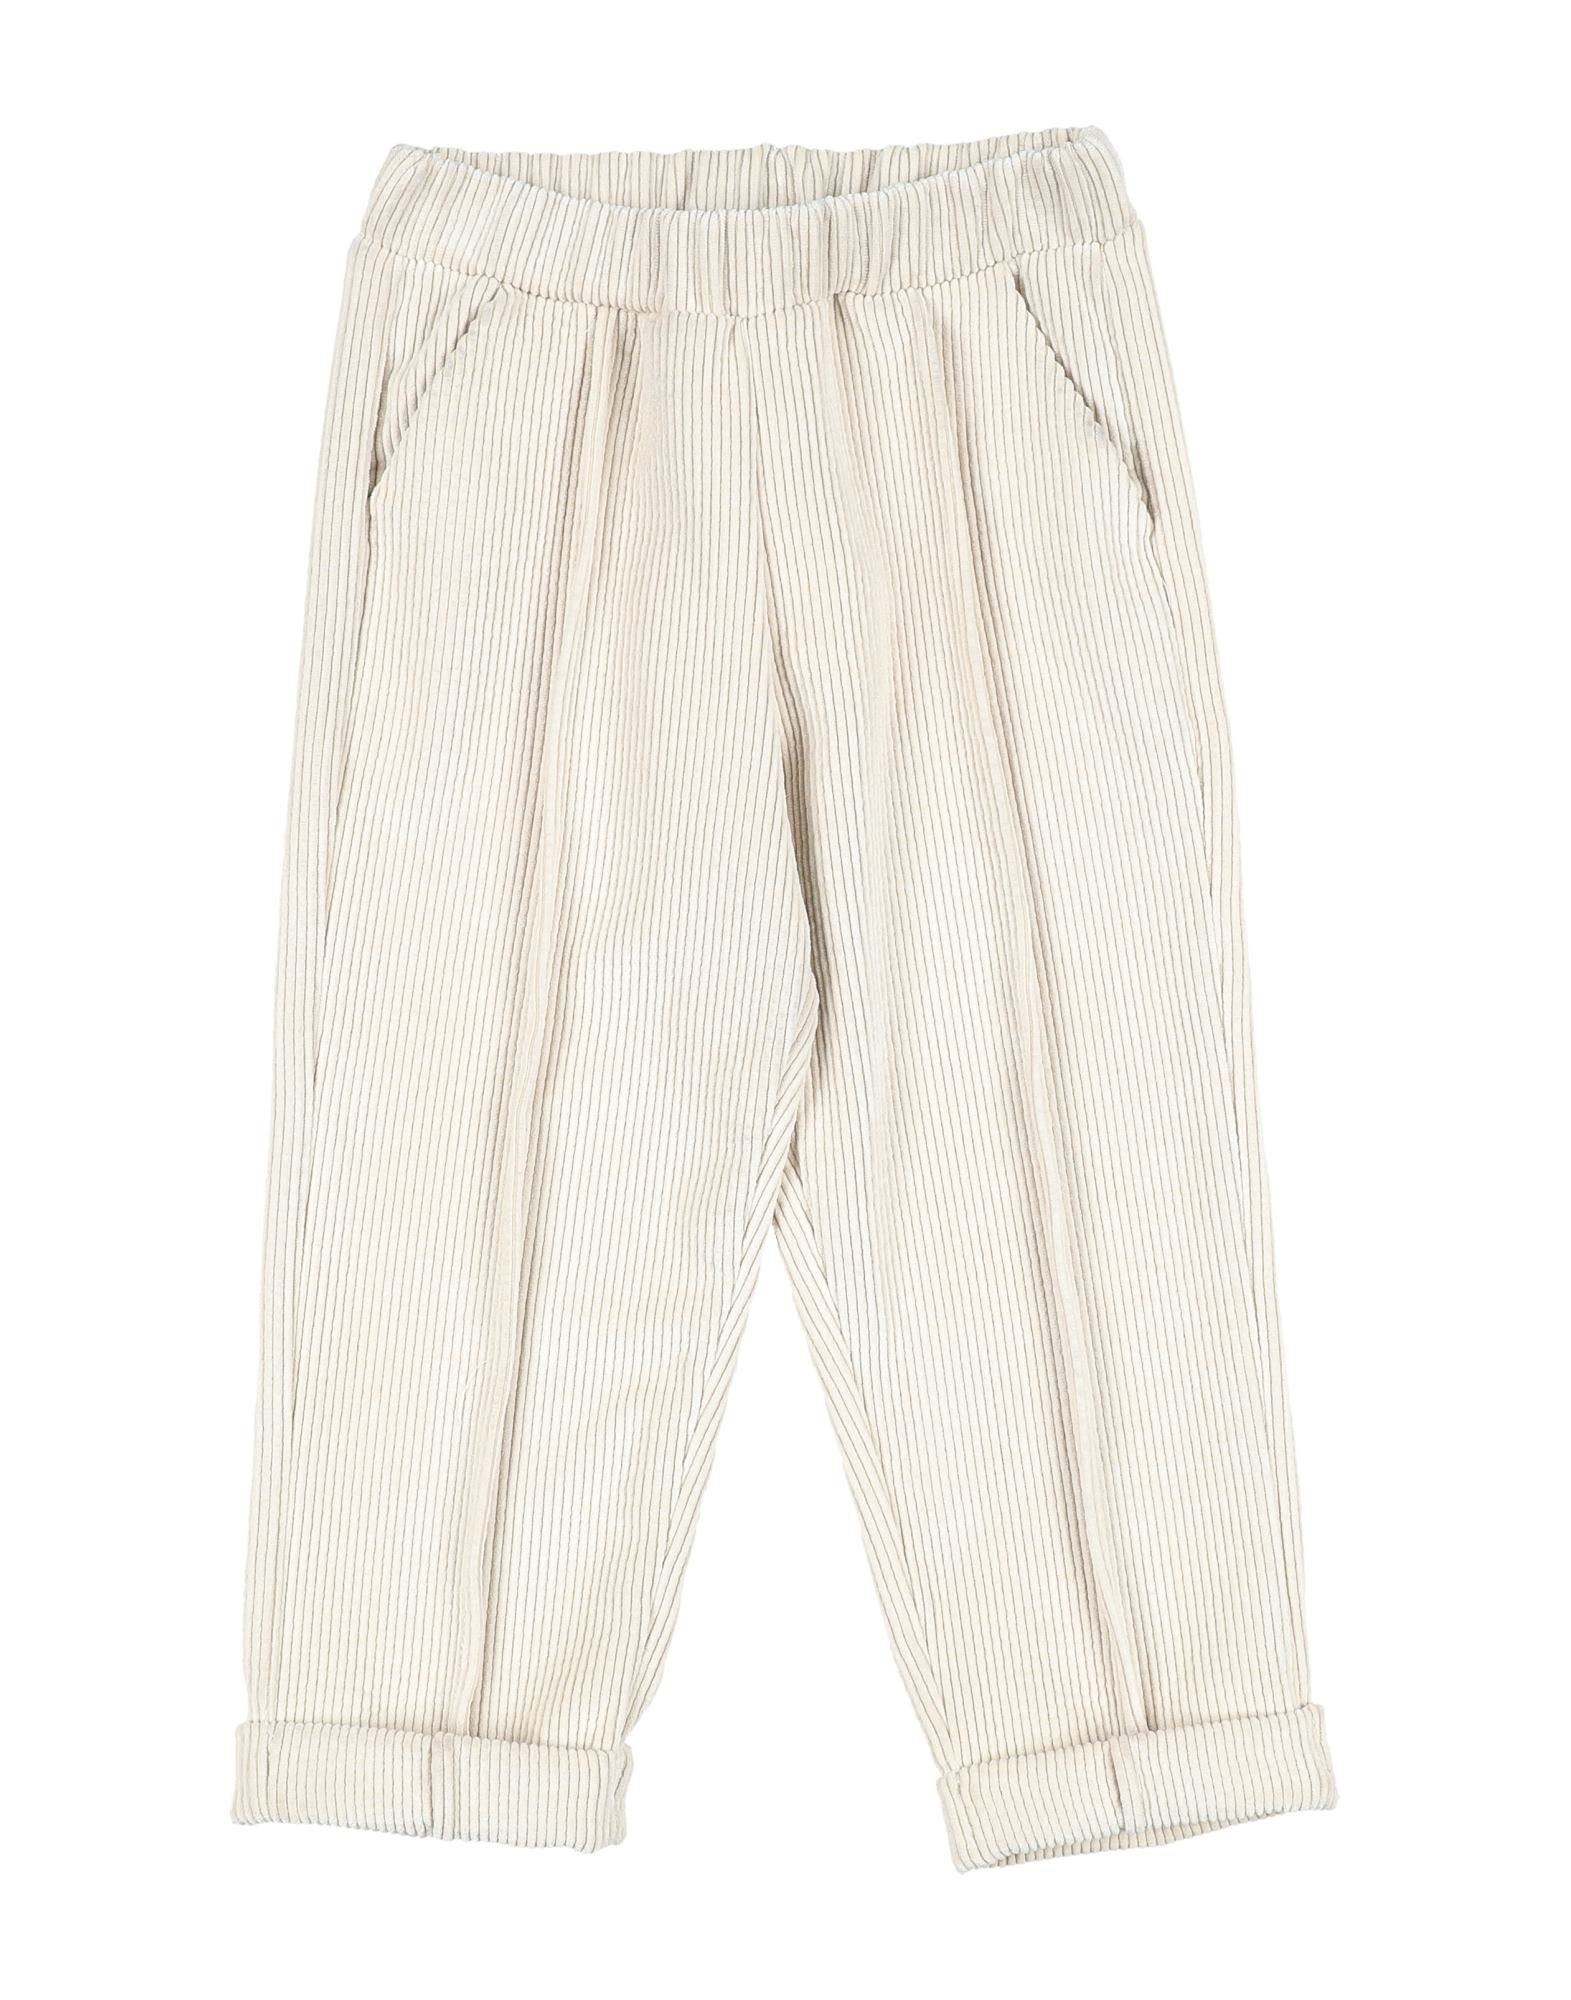 Meilisa Bai Kids'  Pants In White